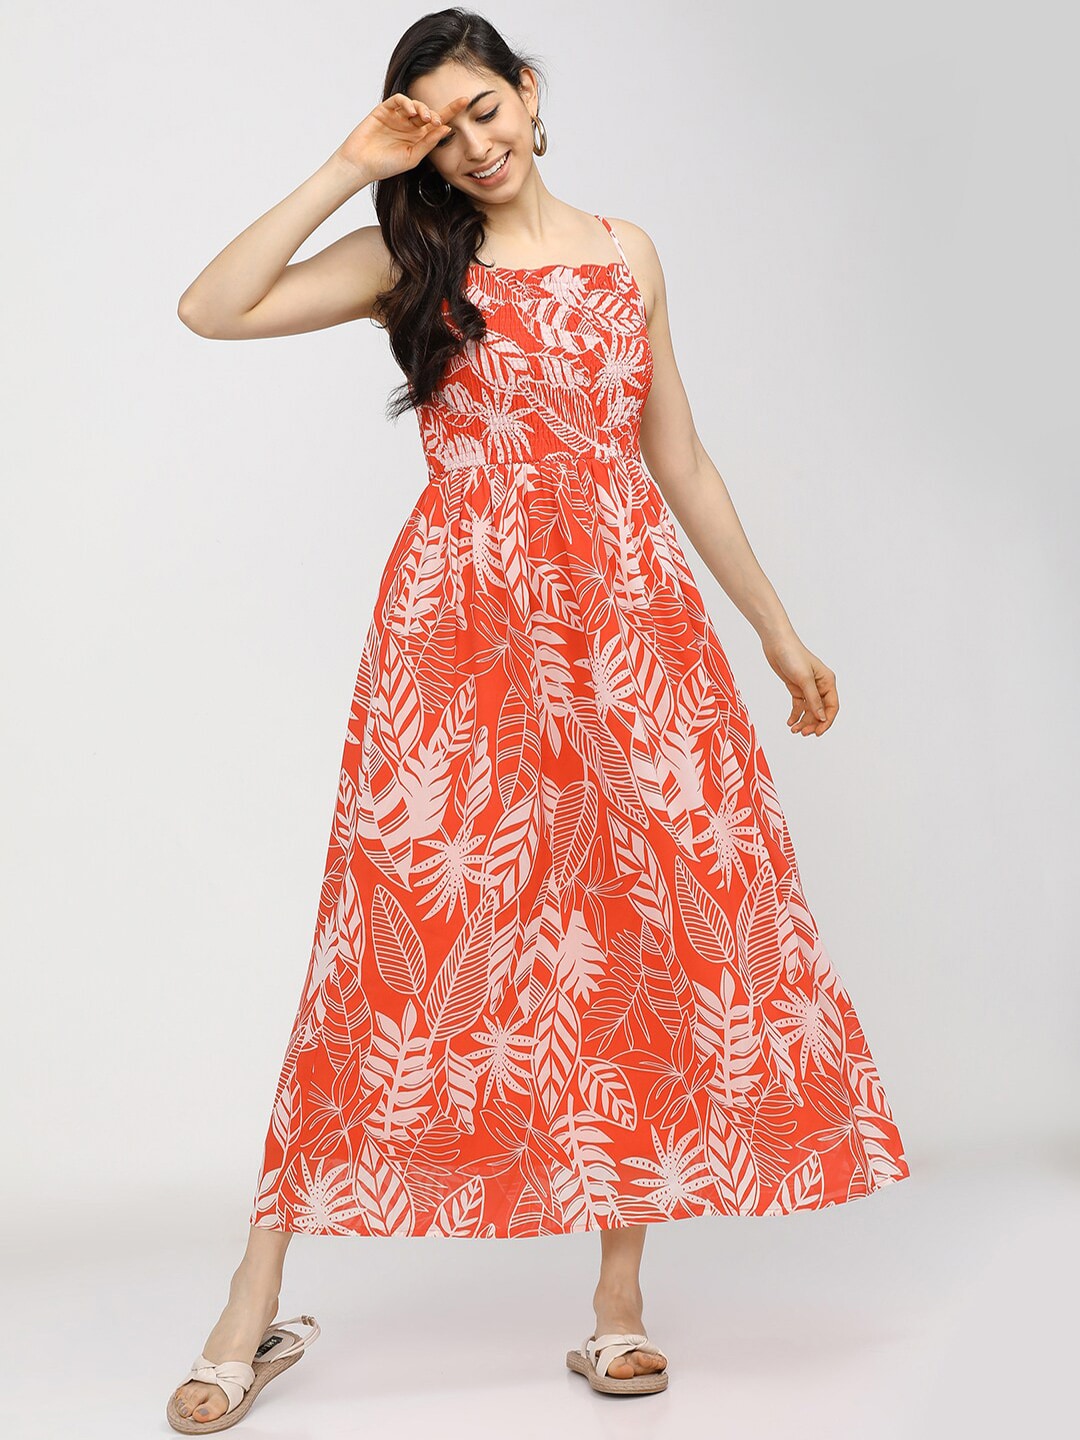 Tokyo Talkies Orange Floral Printed Shoulder Strap Fit & Flare Midi Dress Price in India